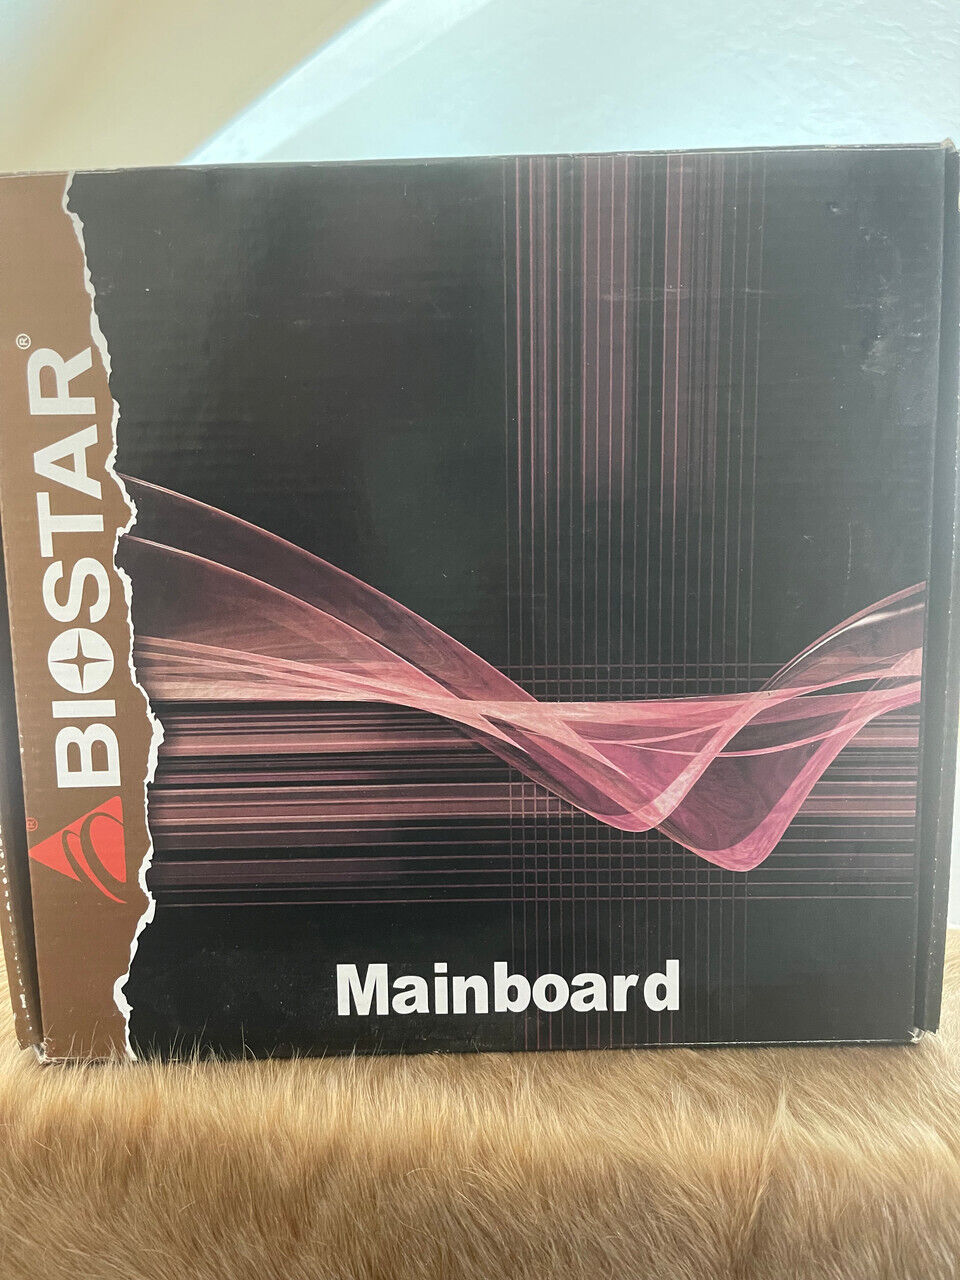 Biostar Mainboard | New in Open Box